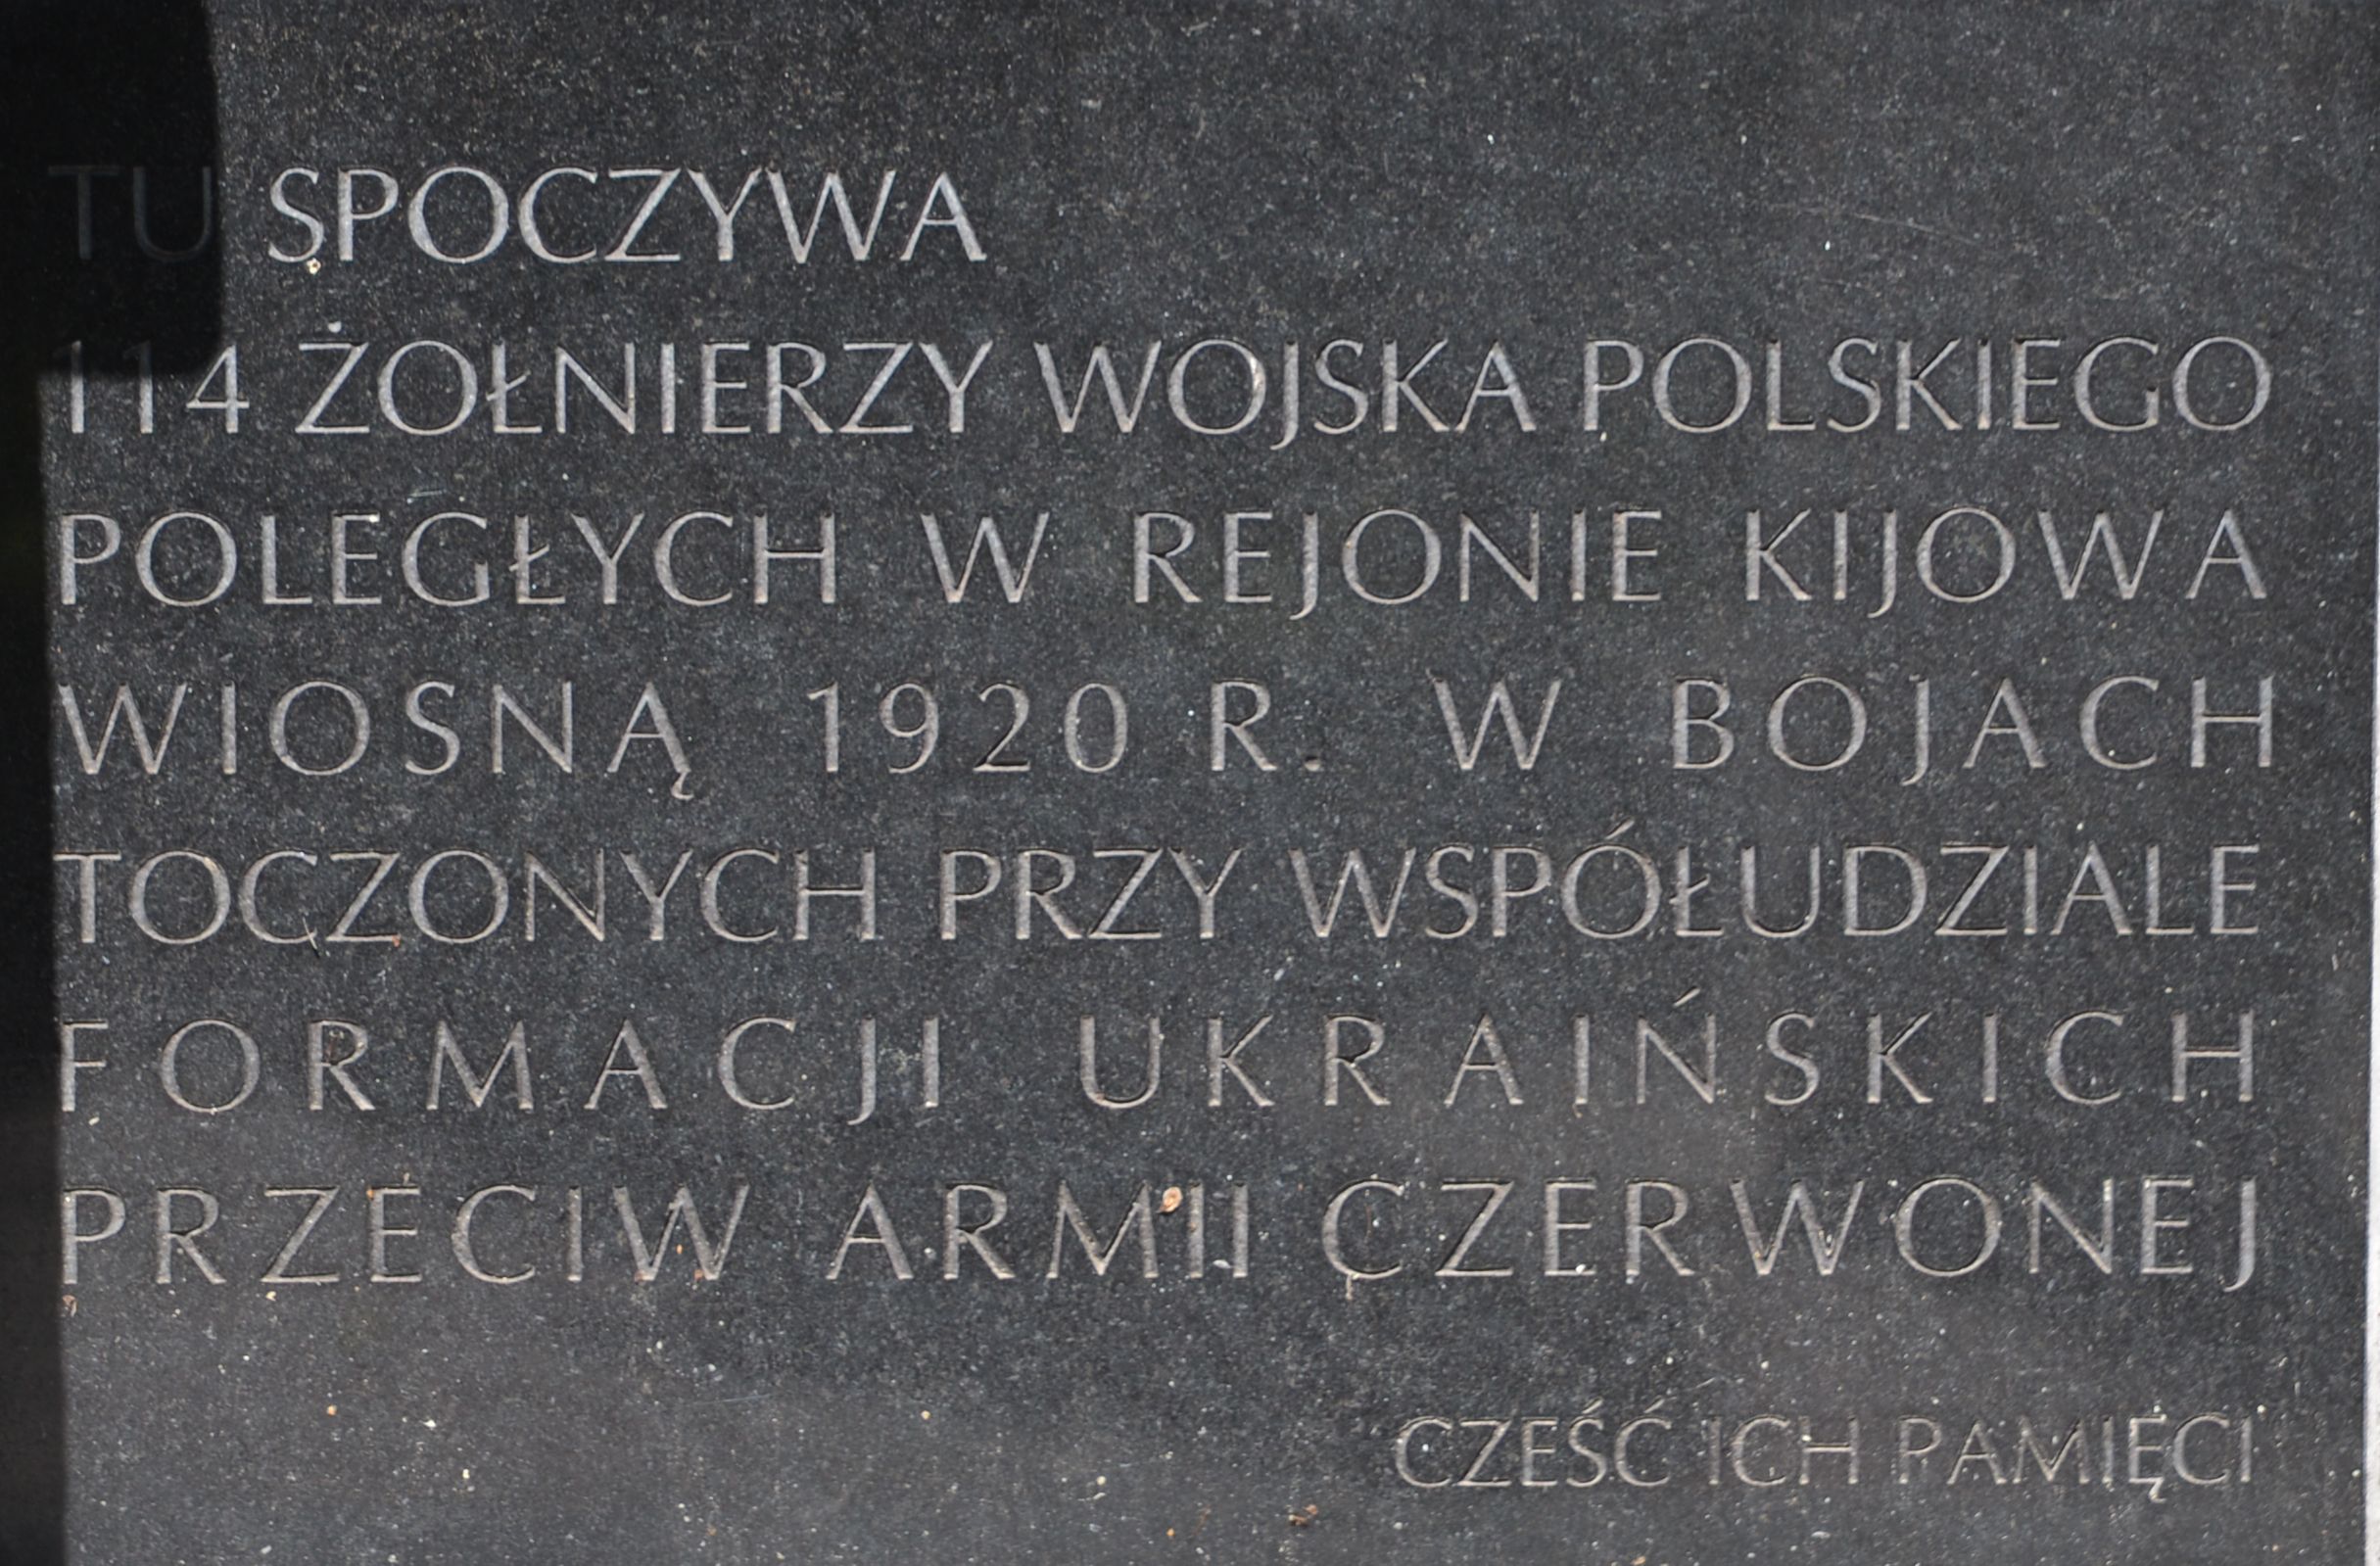 Inscription from the 1920 Polish soldiers' quarters (legionaries' quarters)